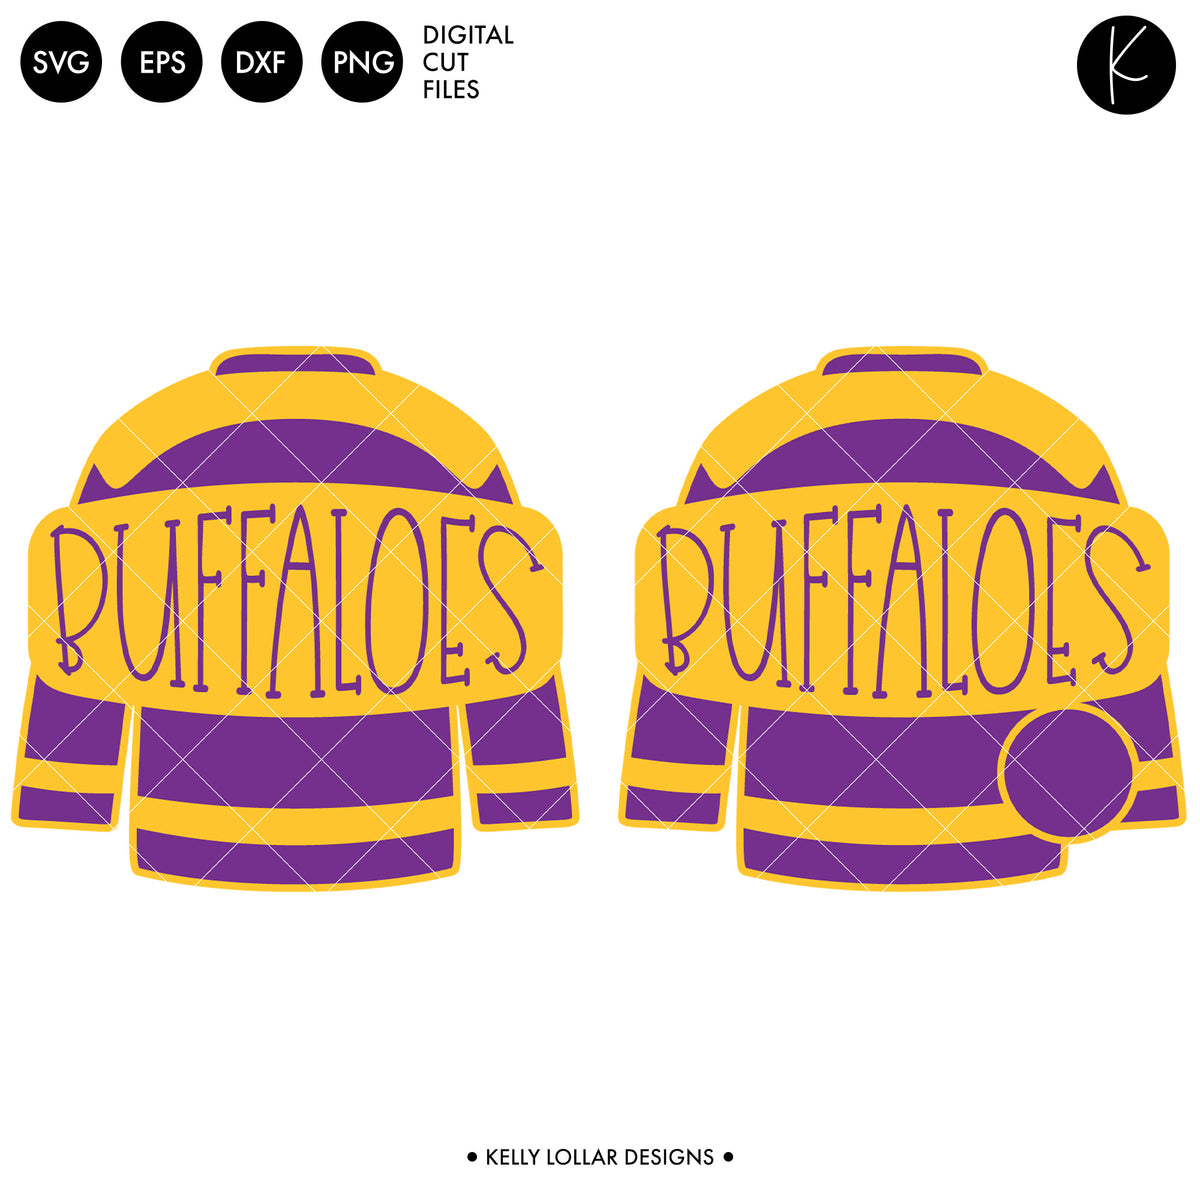 Buffaloes Hockey Bundle | SVG DXF EPS PNG Cut Files